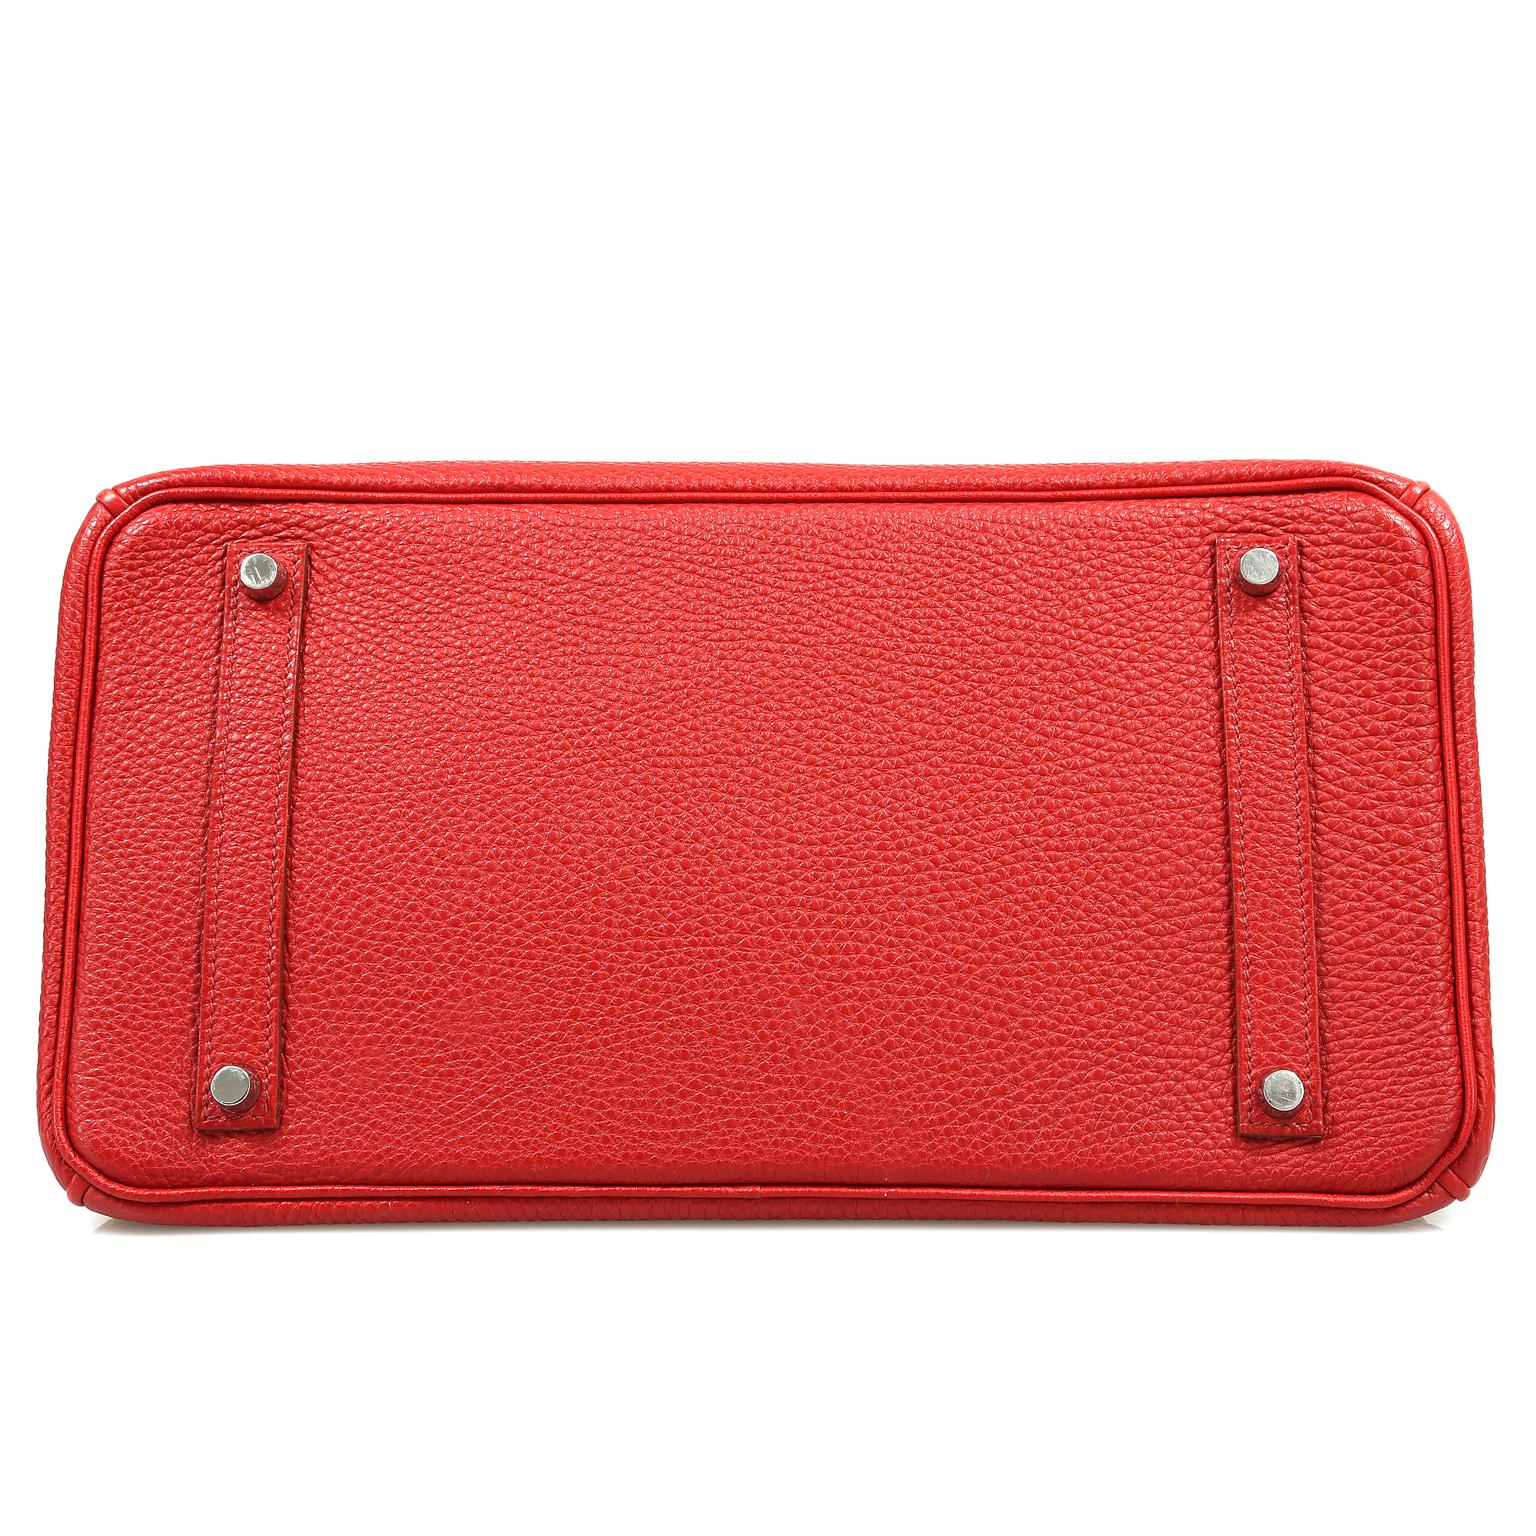 Women's Hermès Red Togo 35 cm Birkin Bag